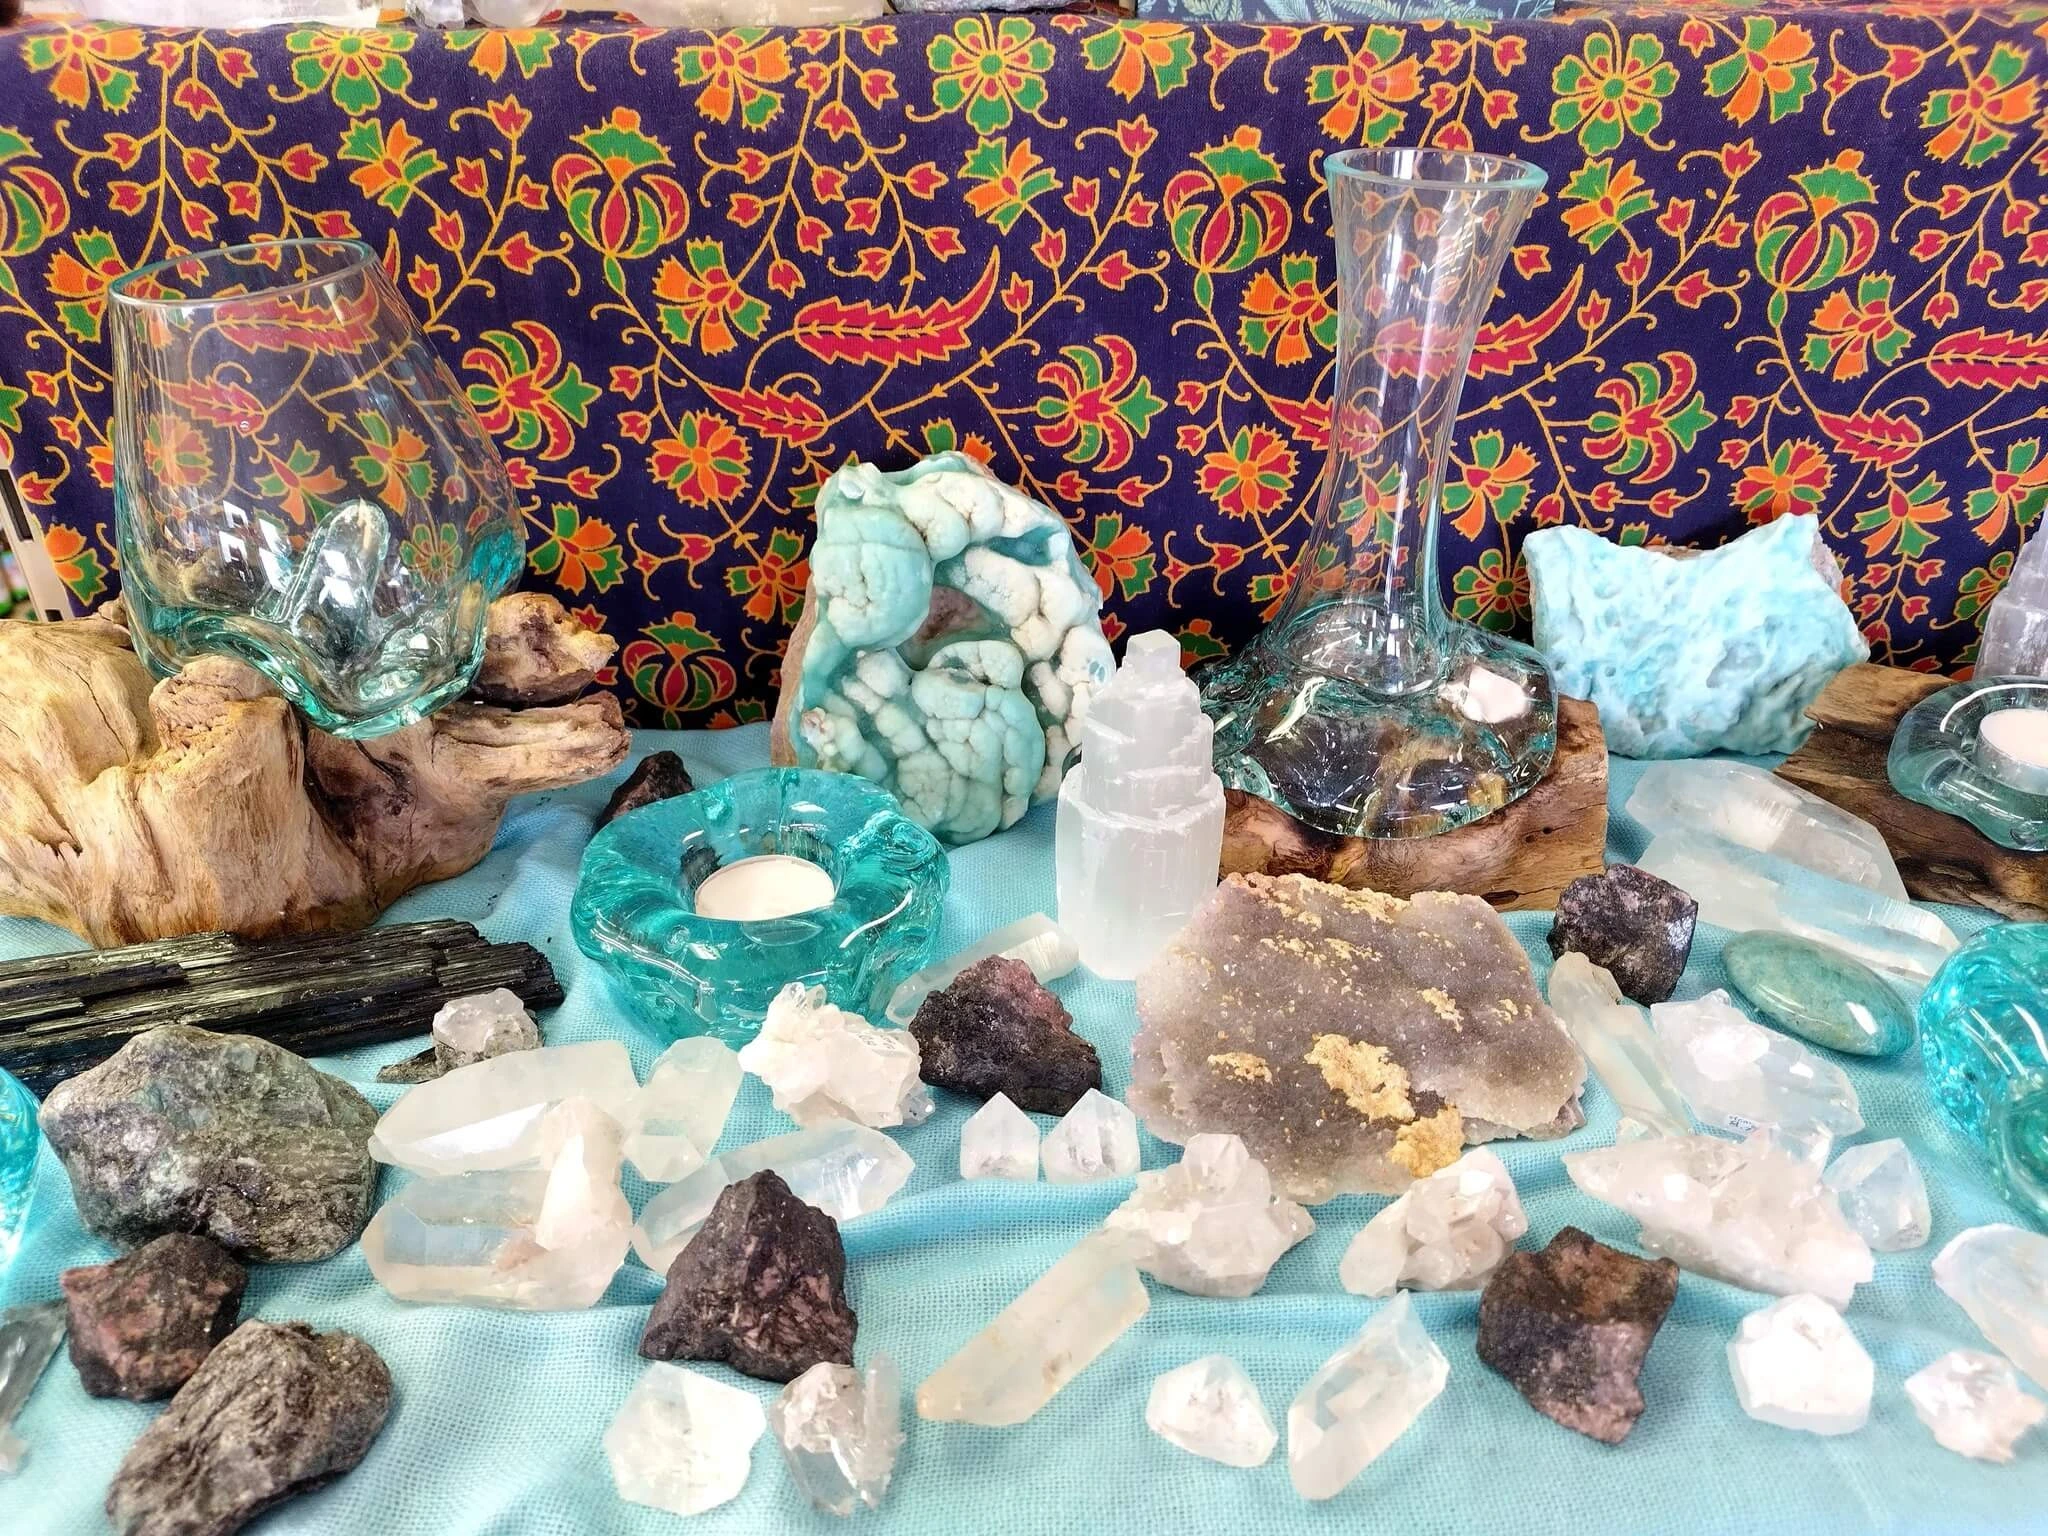 A display of crystals